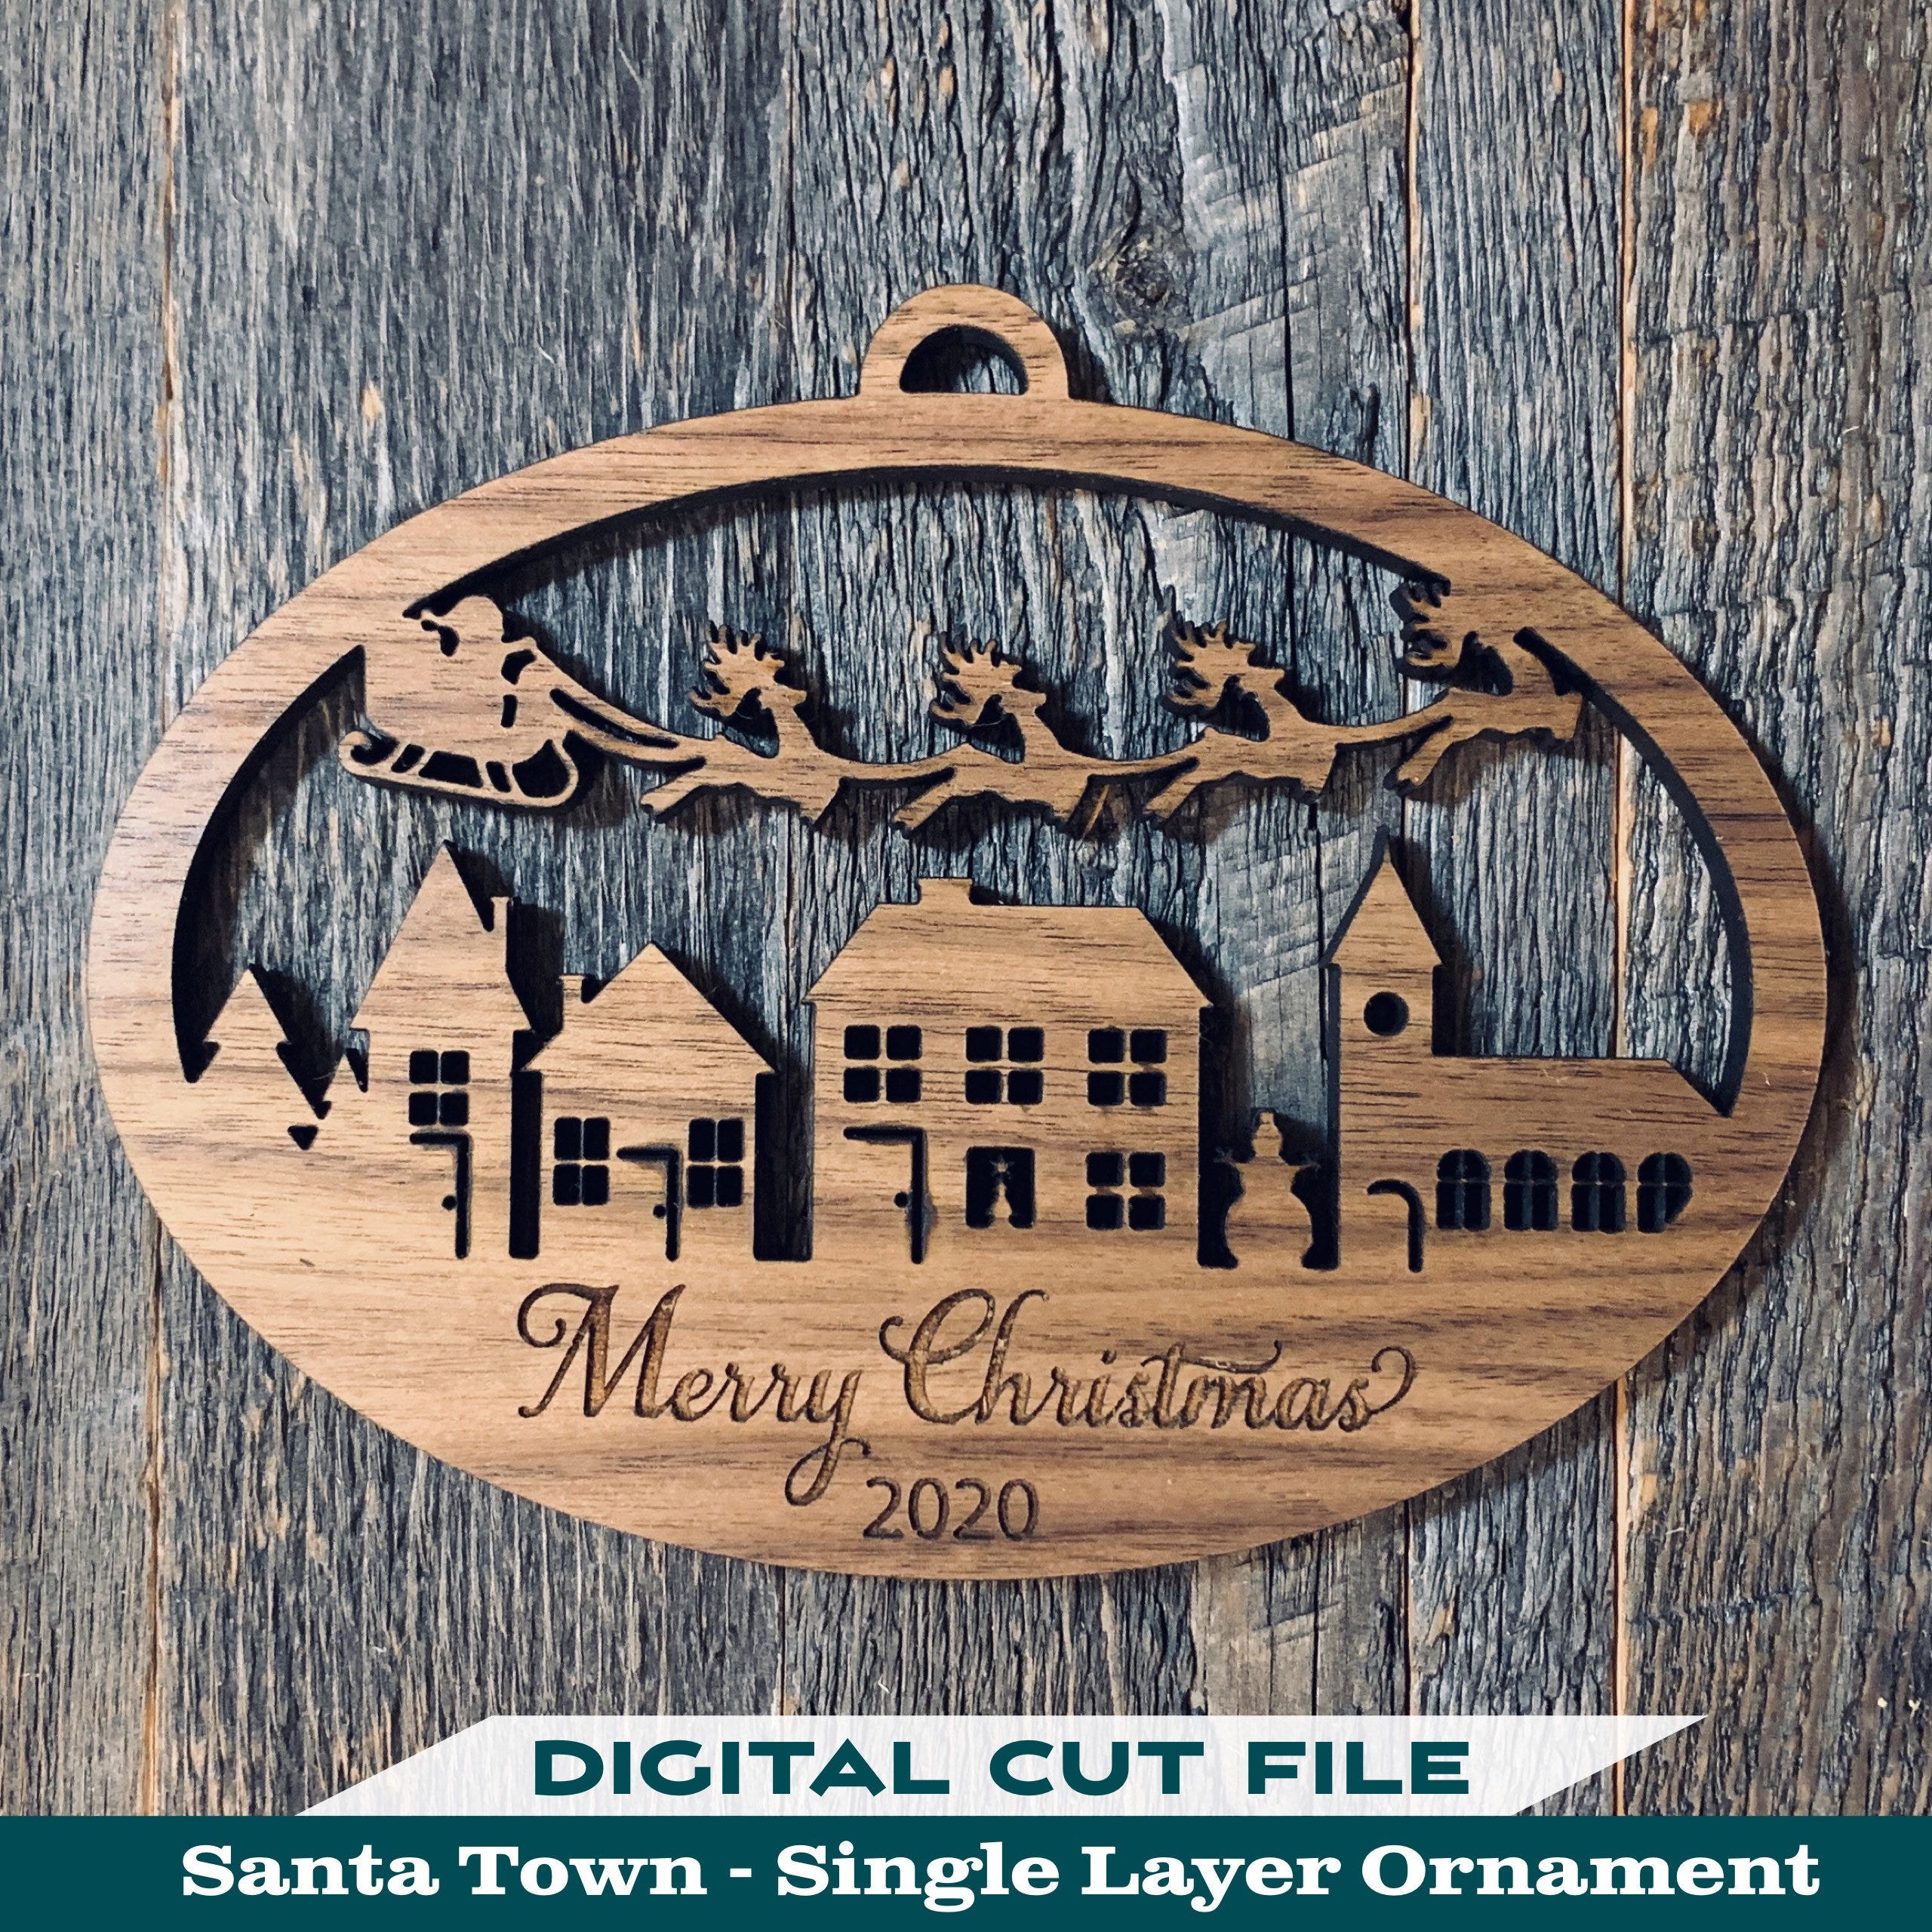 Santa Town Single Layer Ornament SVG - Easily Customizable - Realtor, School, Business Gifts - Glowforge Laser Cut File